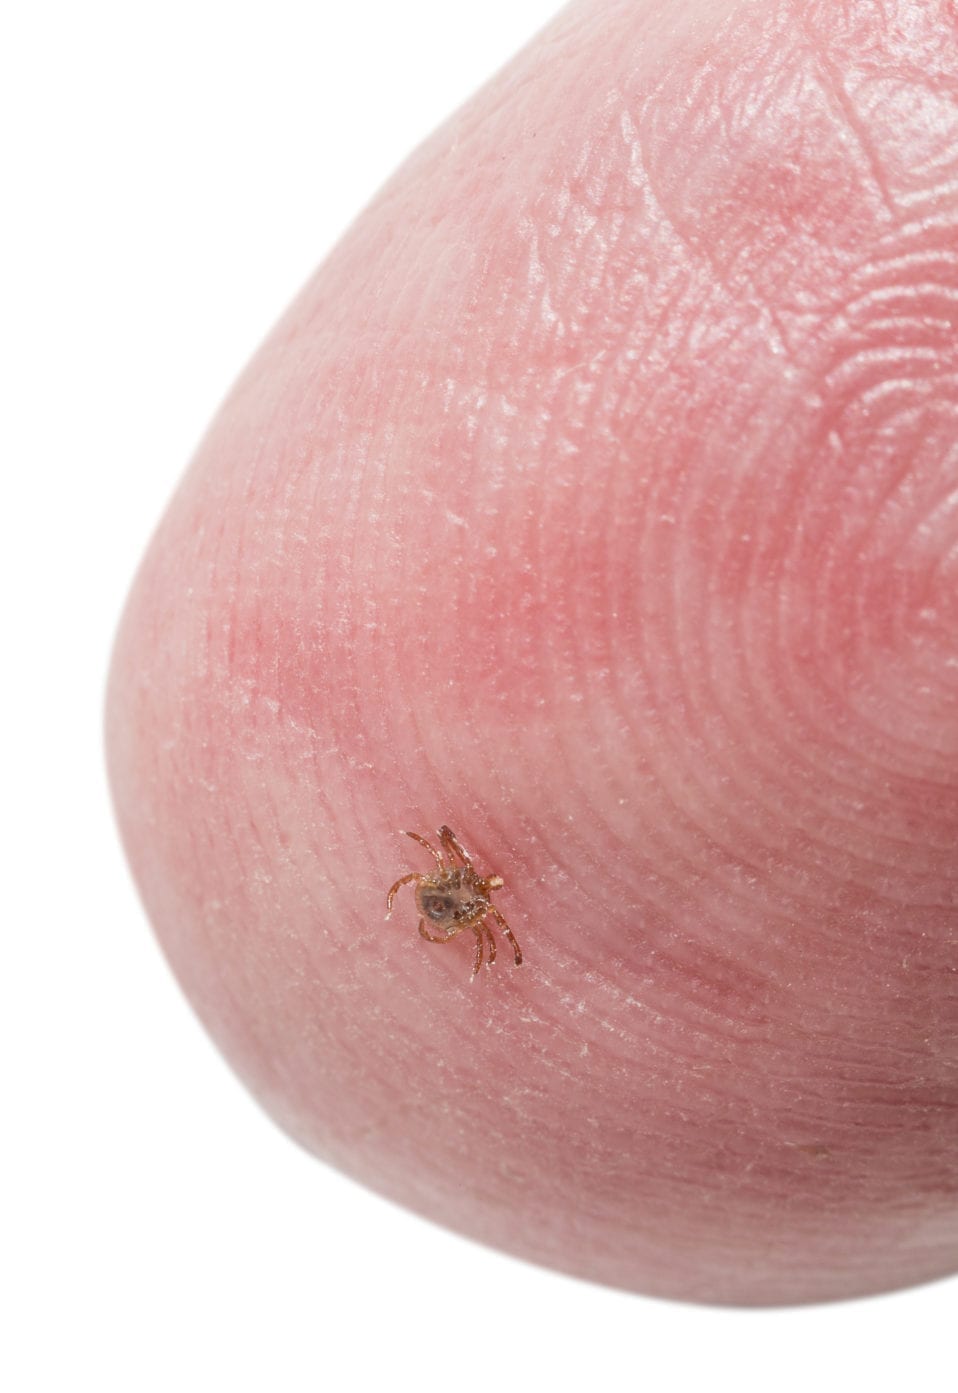 Tiny Deer Tick On Finger Tip Of Man • Minnesota Lyme Association